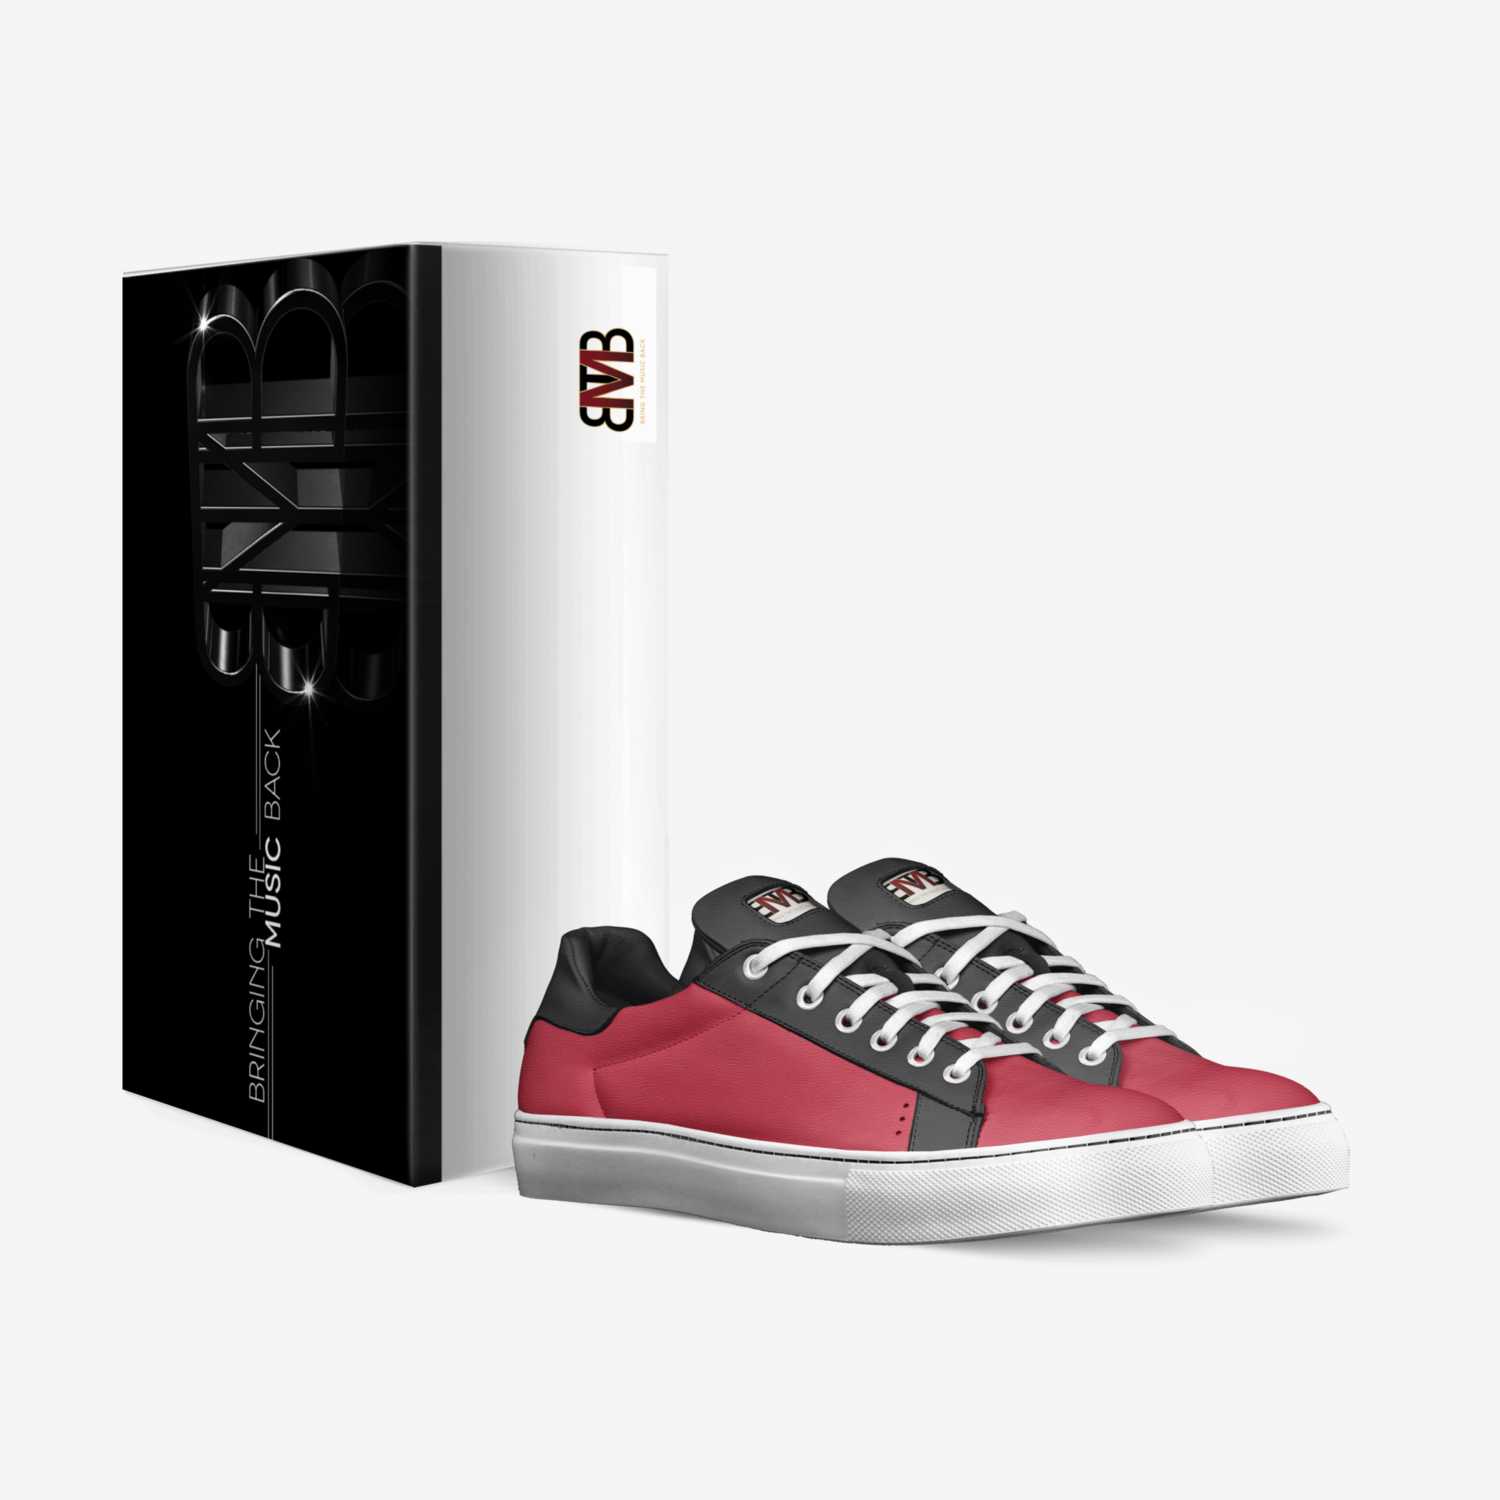 BTMB ! custom made in Italy shoes by Rick Ward | Box view